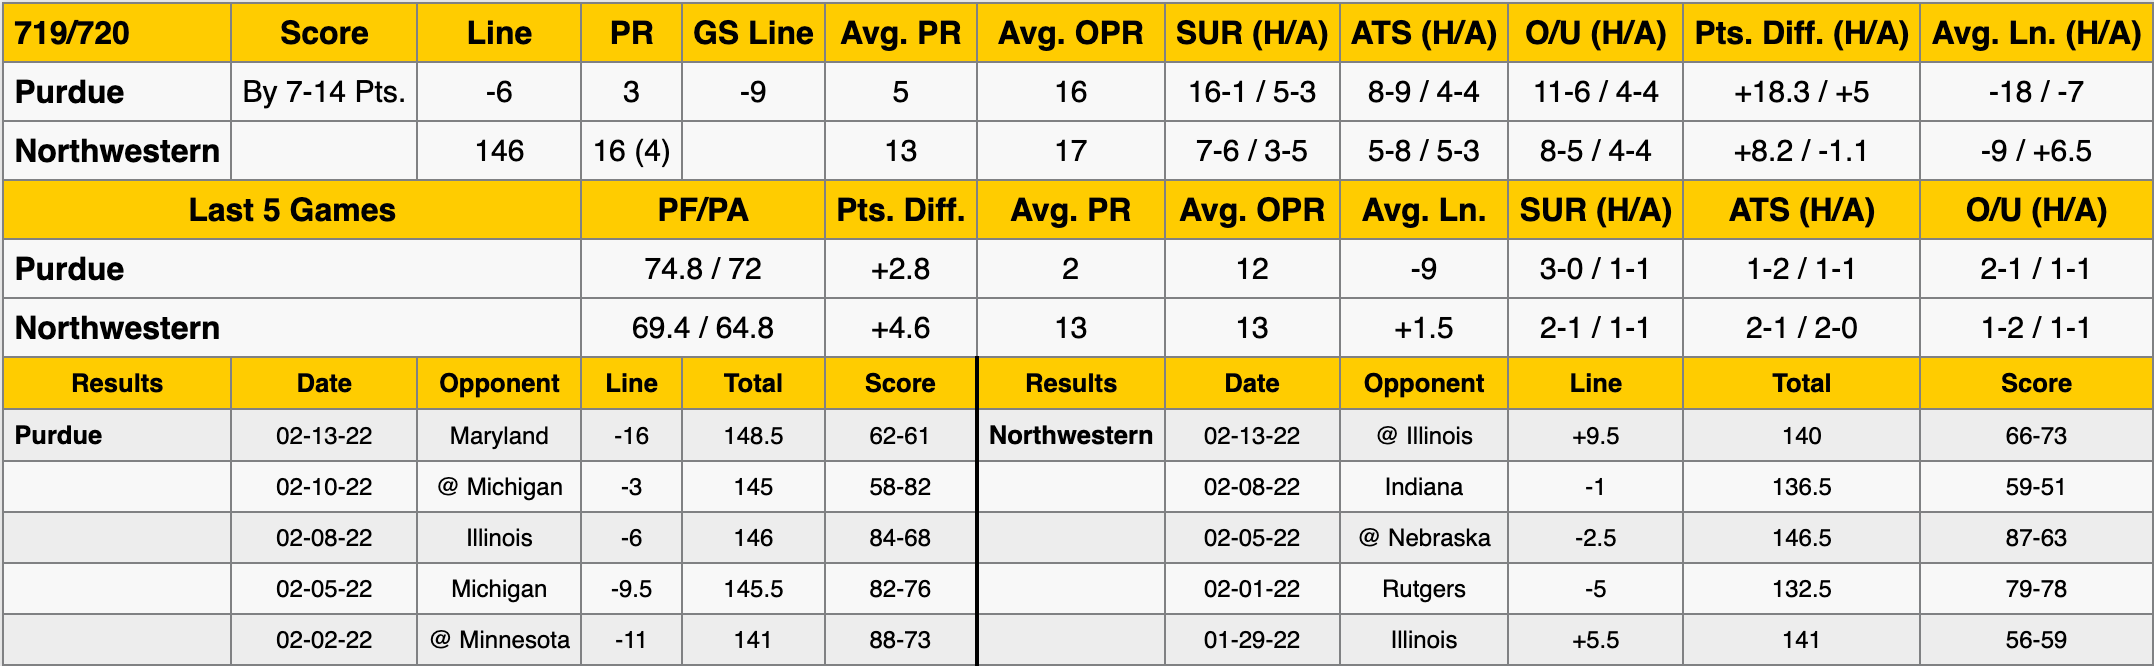 Purdue vs Northwestern Stats